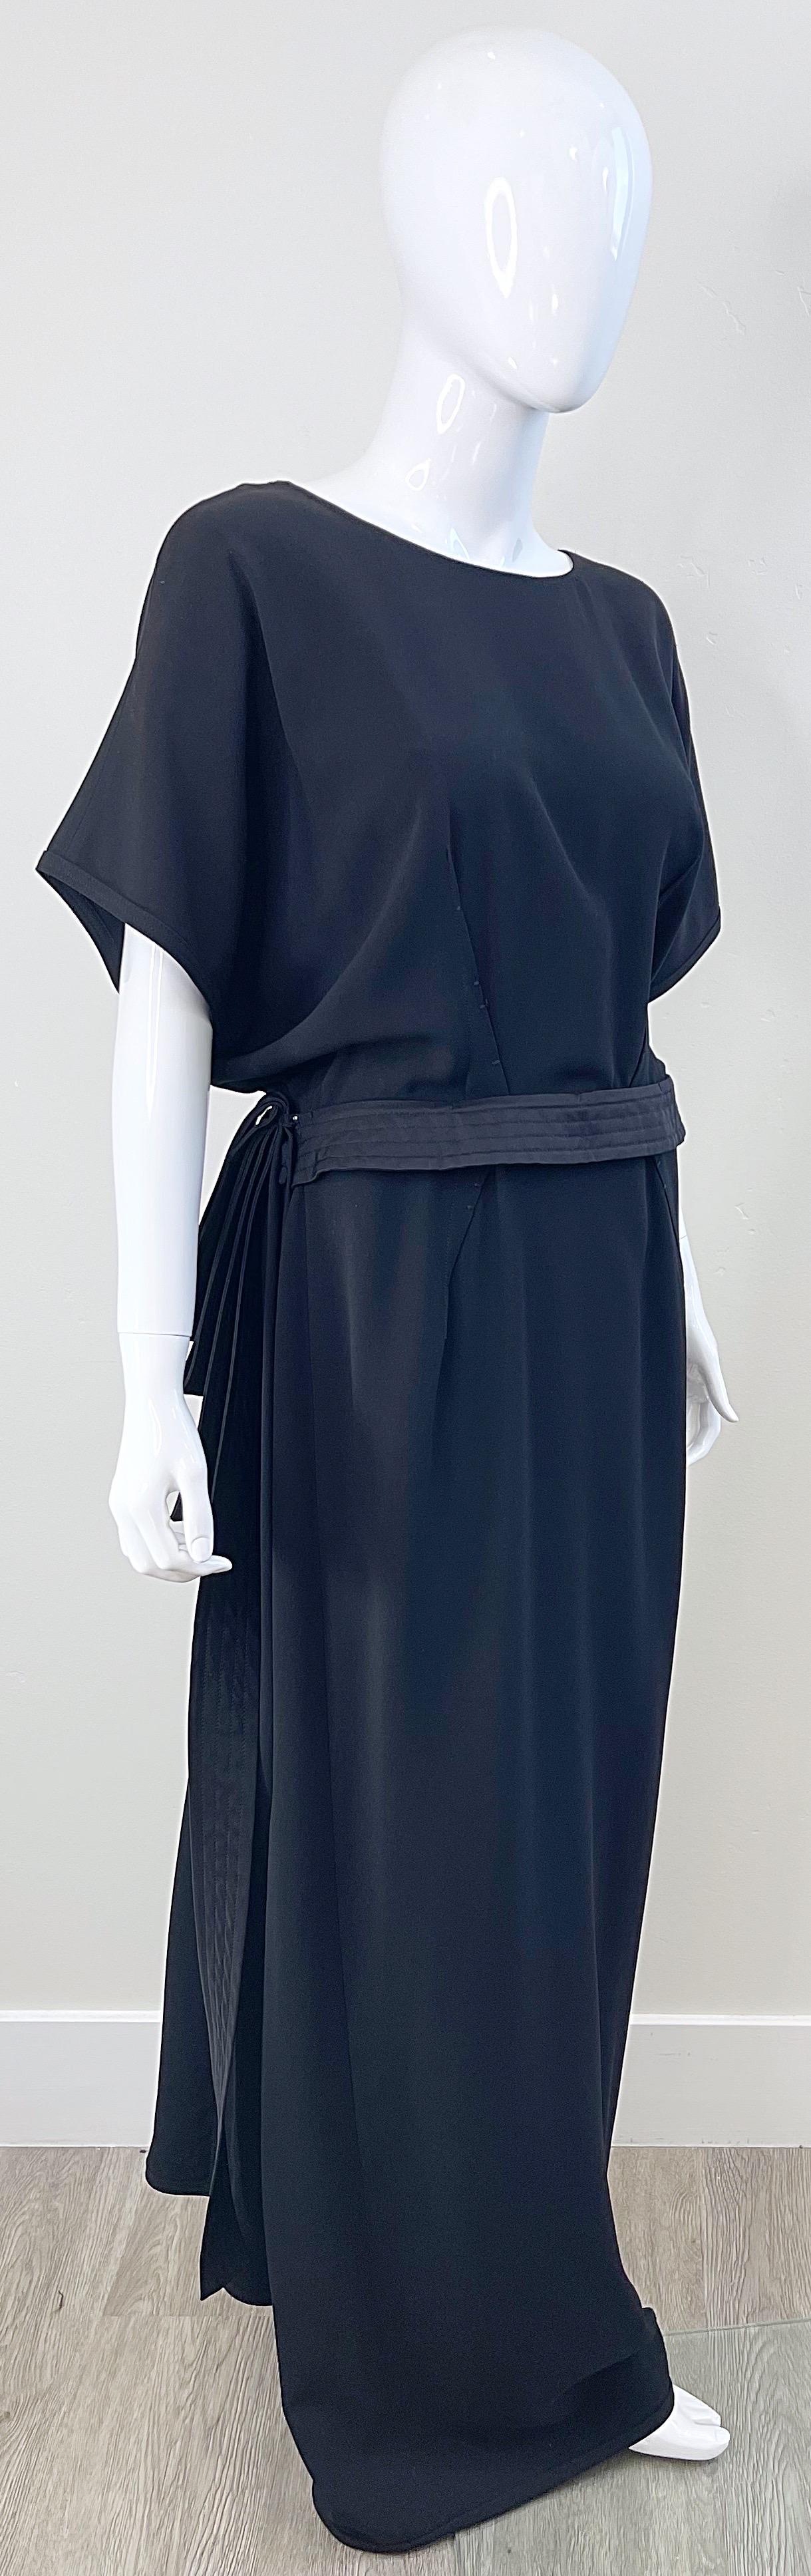 NWT Gianfranco Ferre 2000s Size 44 / 8 - 10 Black Dolman Sleeve Gown Maxi Dress For Sale 6